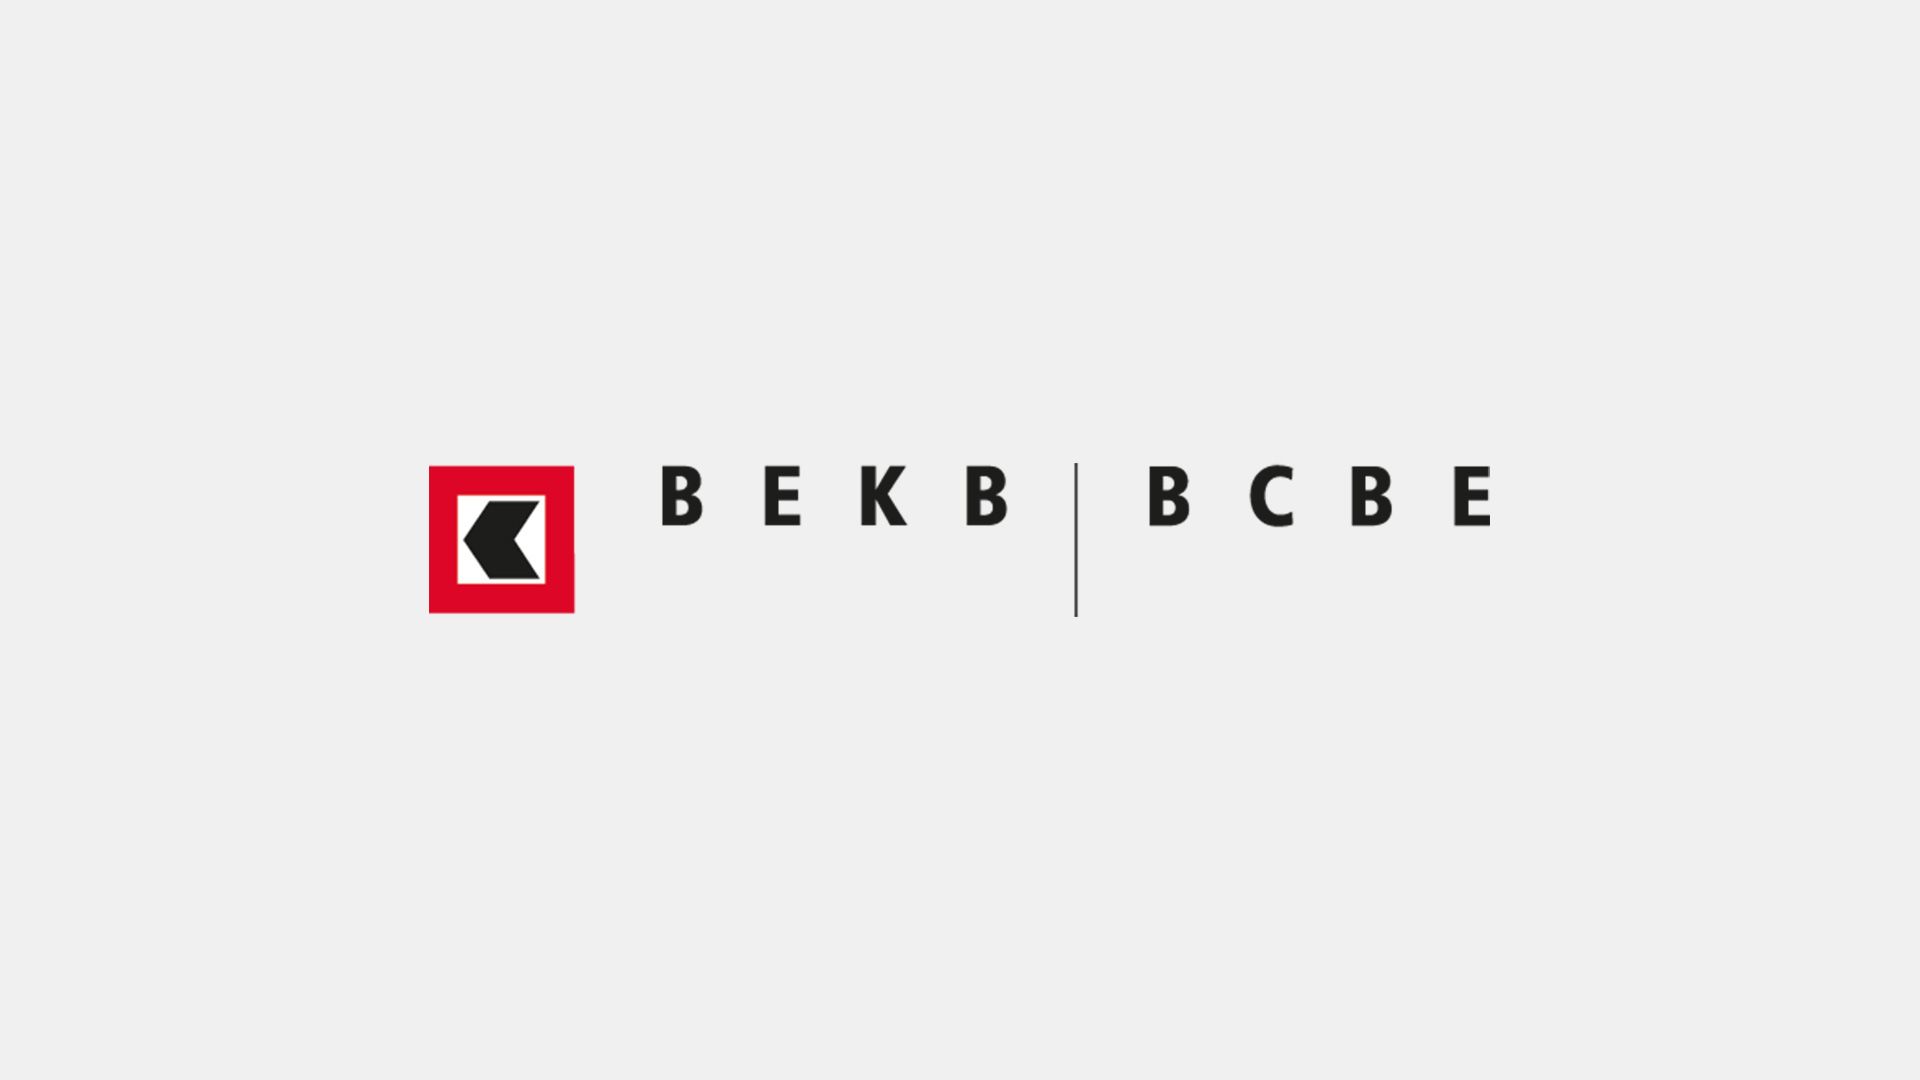 Berner Kantonalbank AG: Online Vermarktung